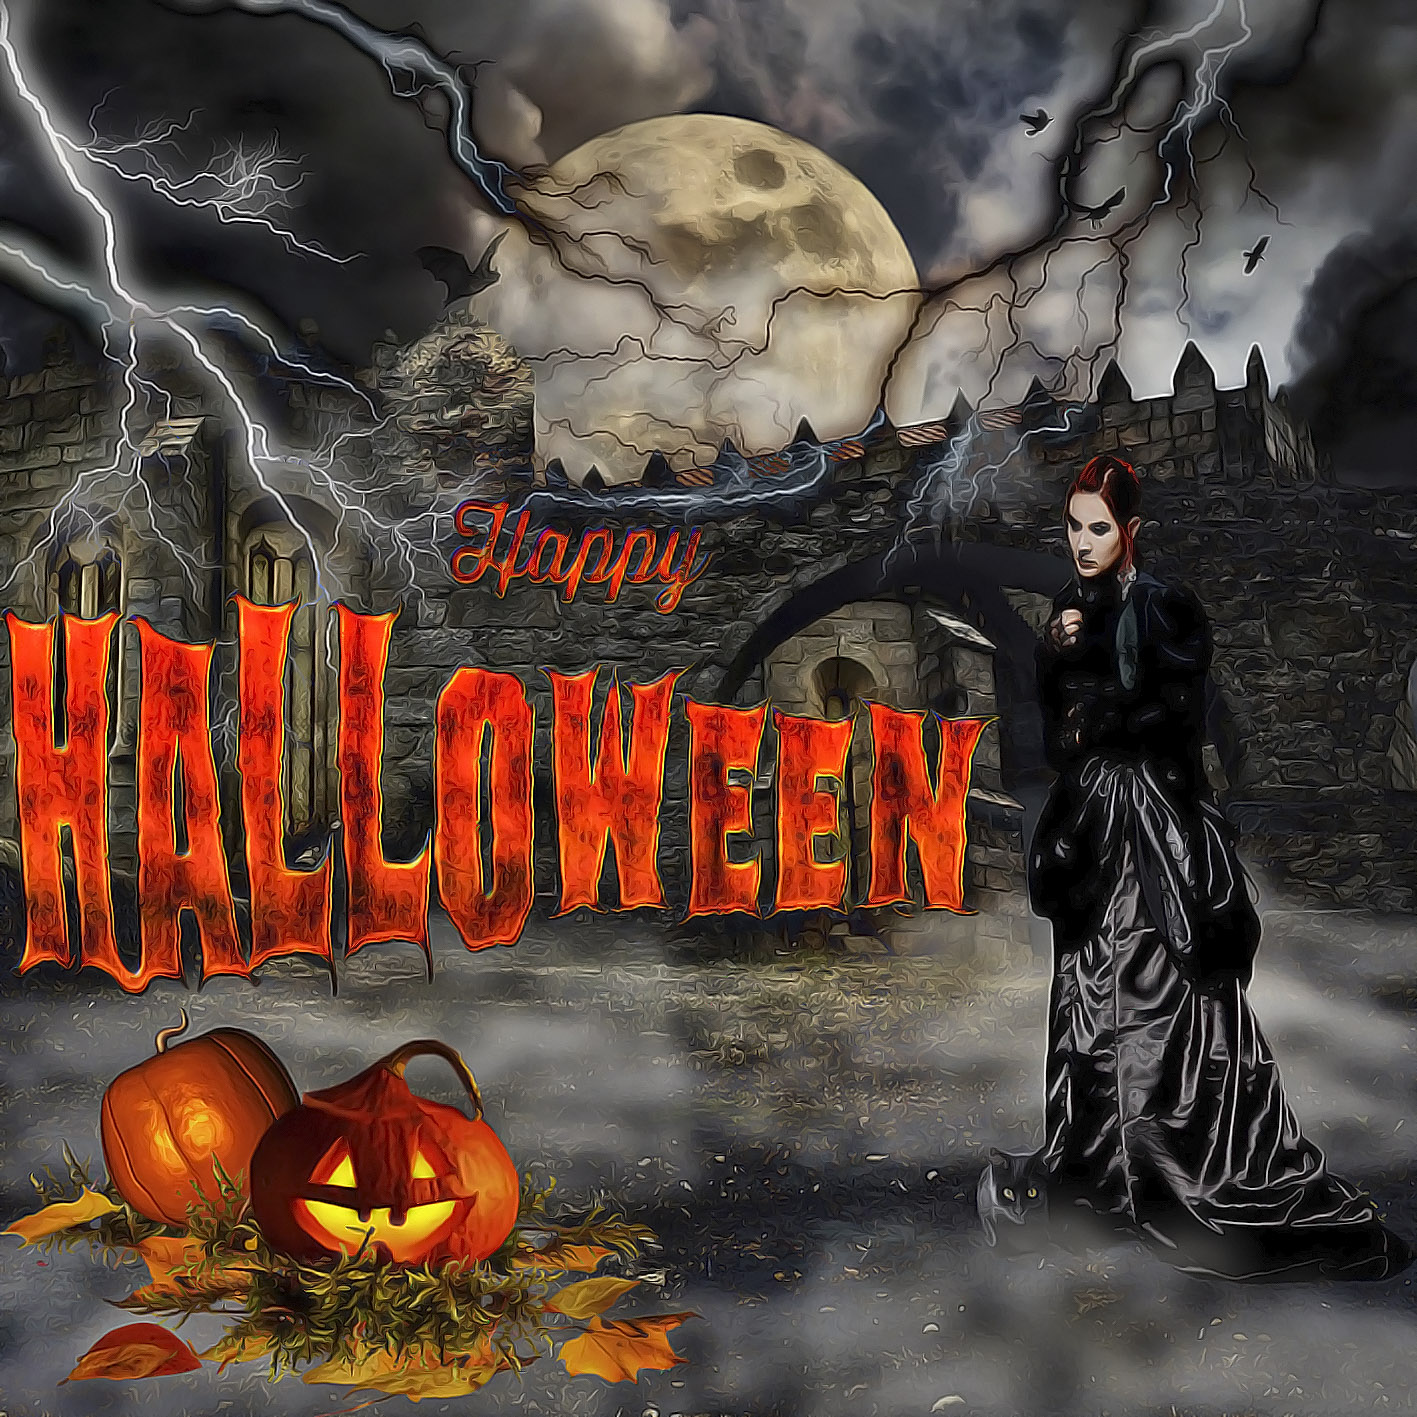 Картинка на Хэллоуин с мрачным замком